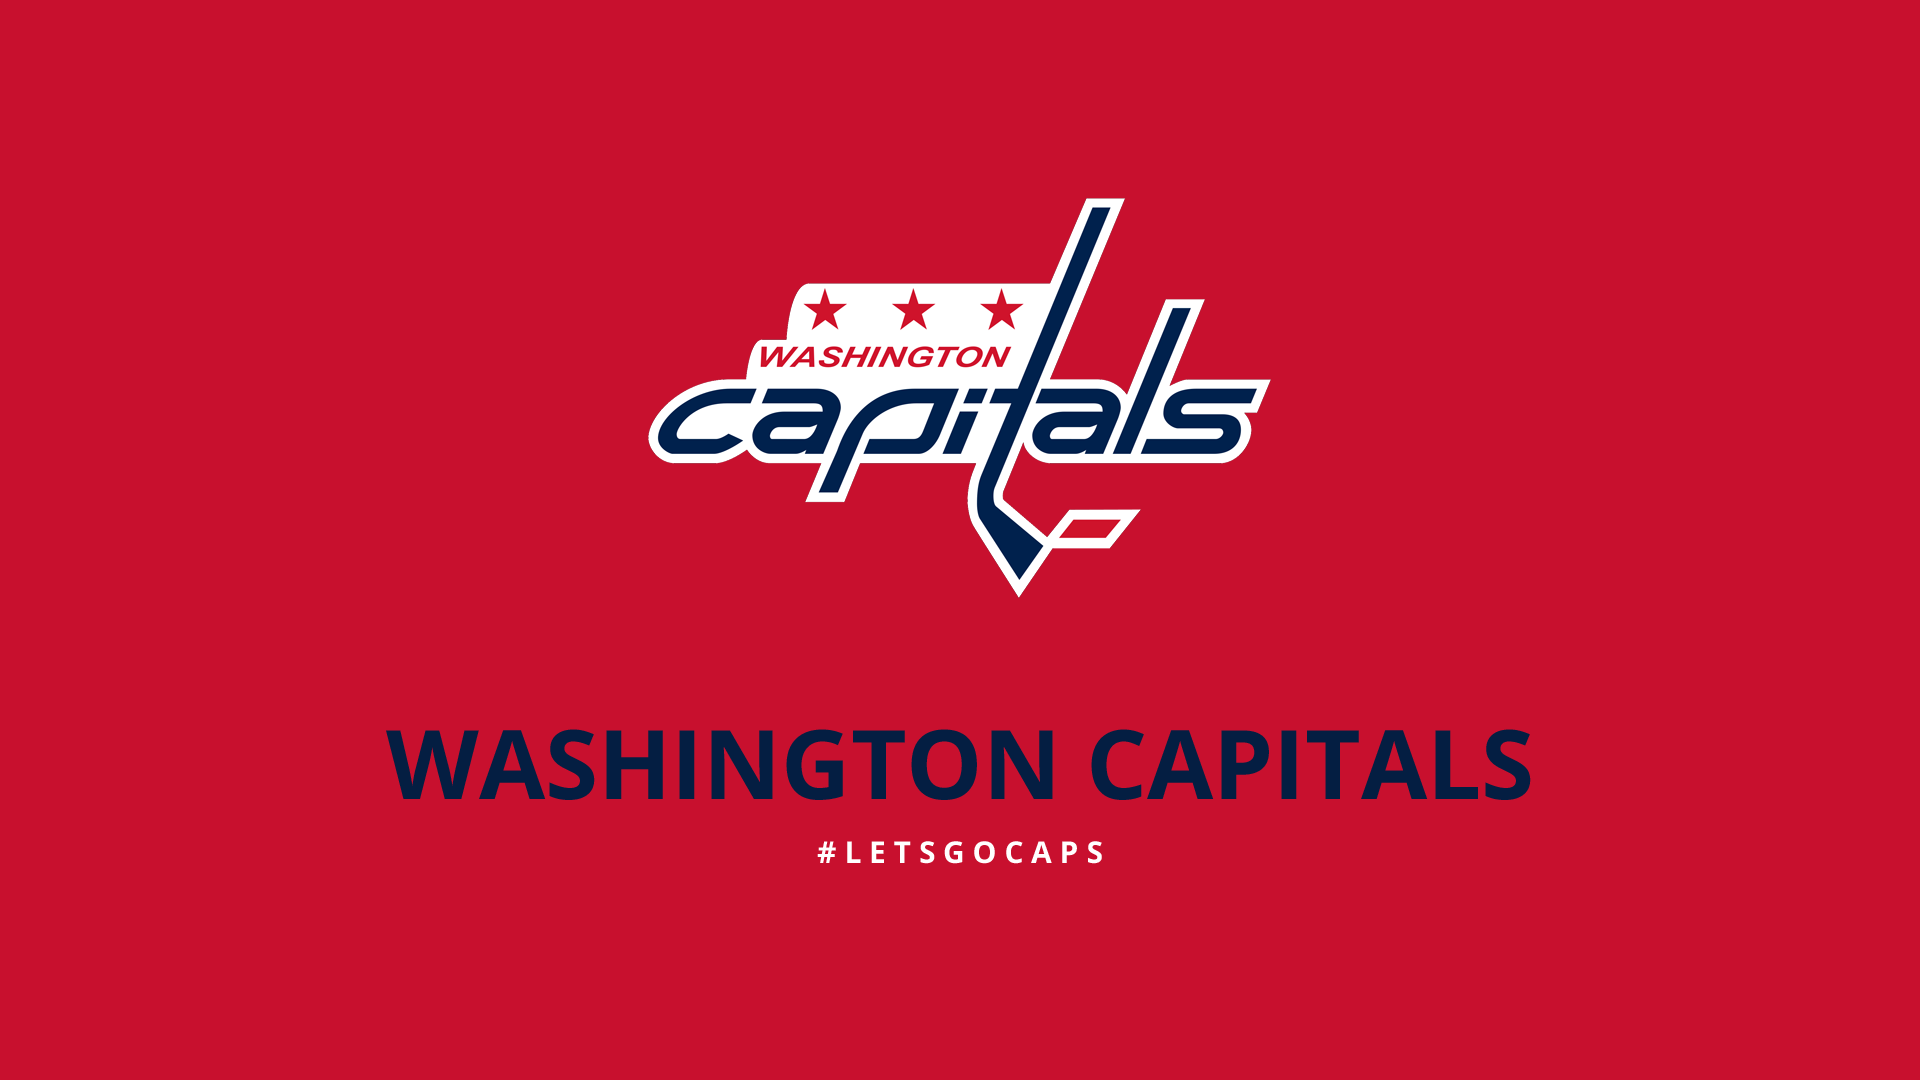 Washington Capitals 449765 Full HD Widescreen